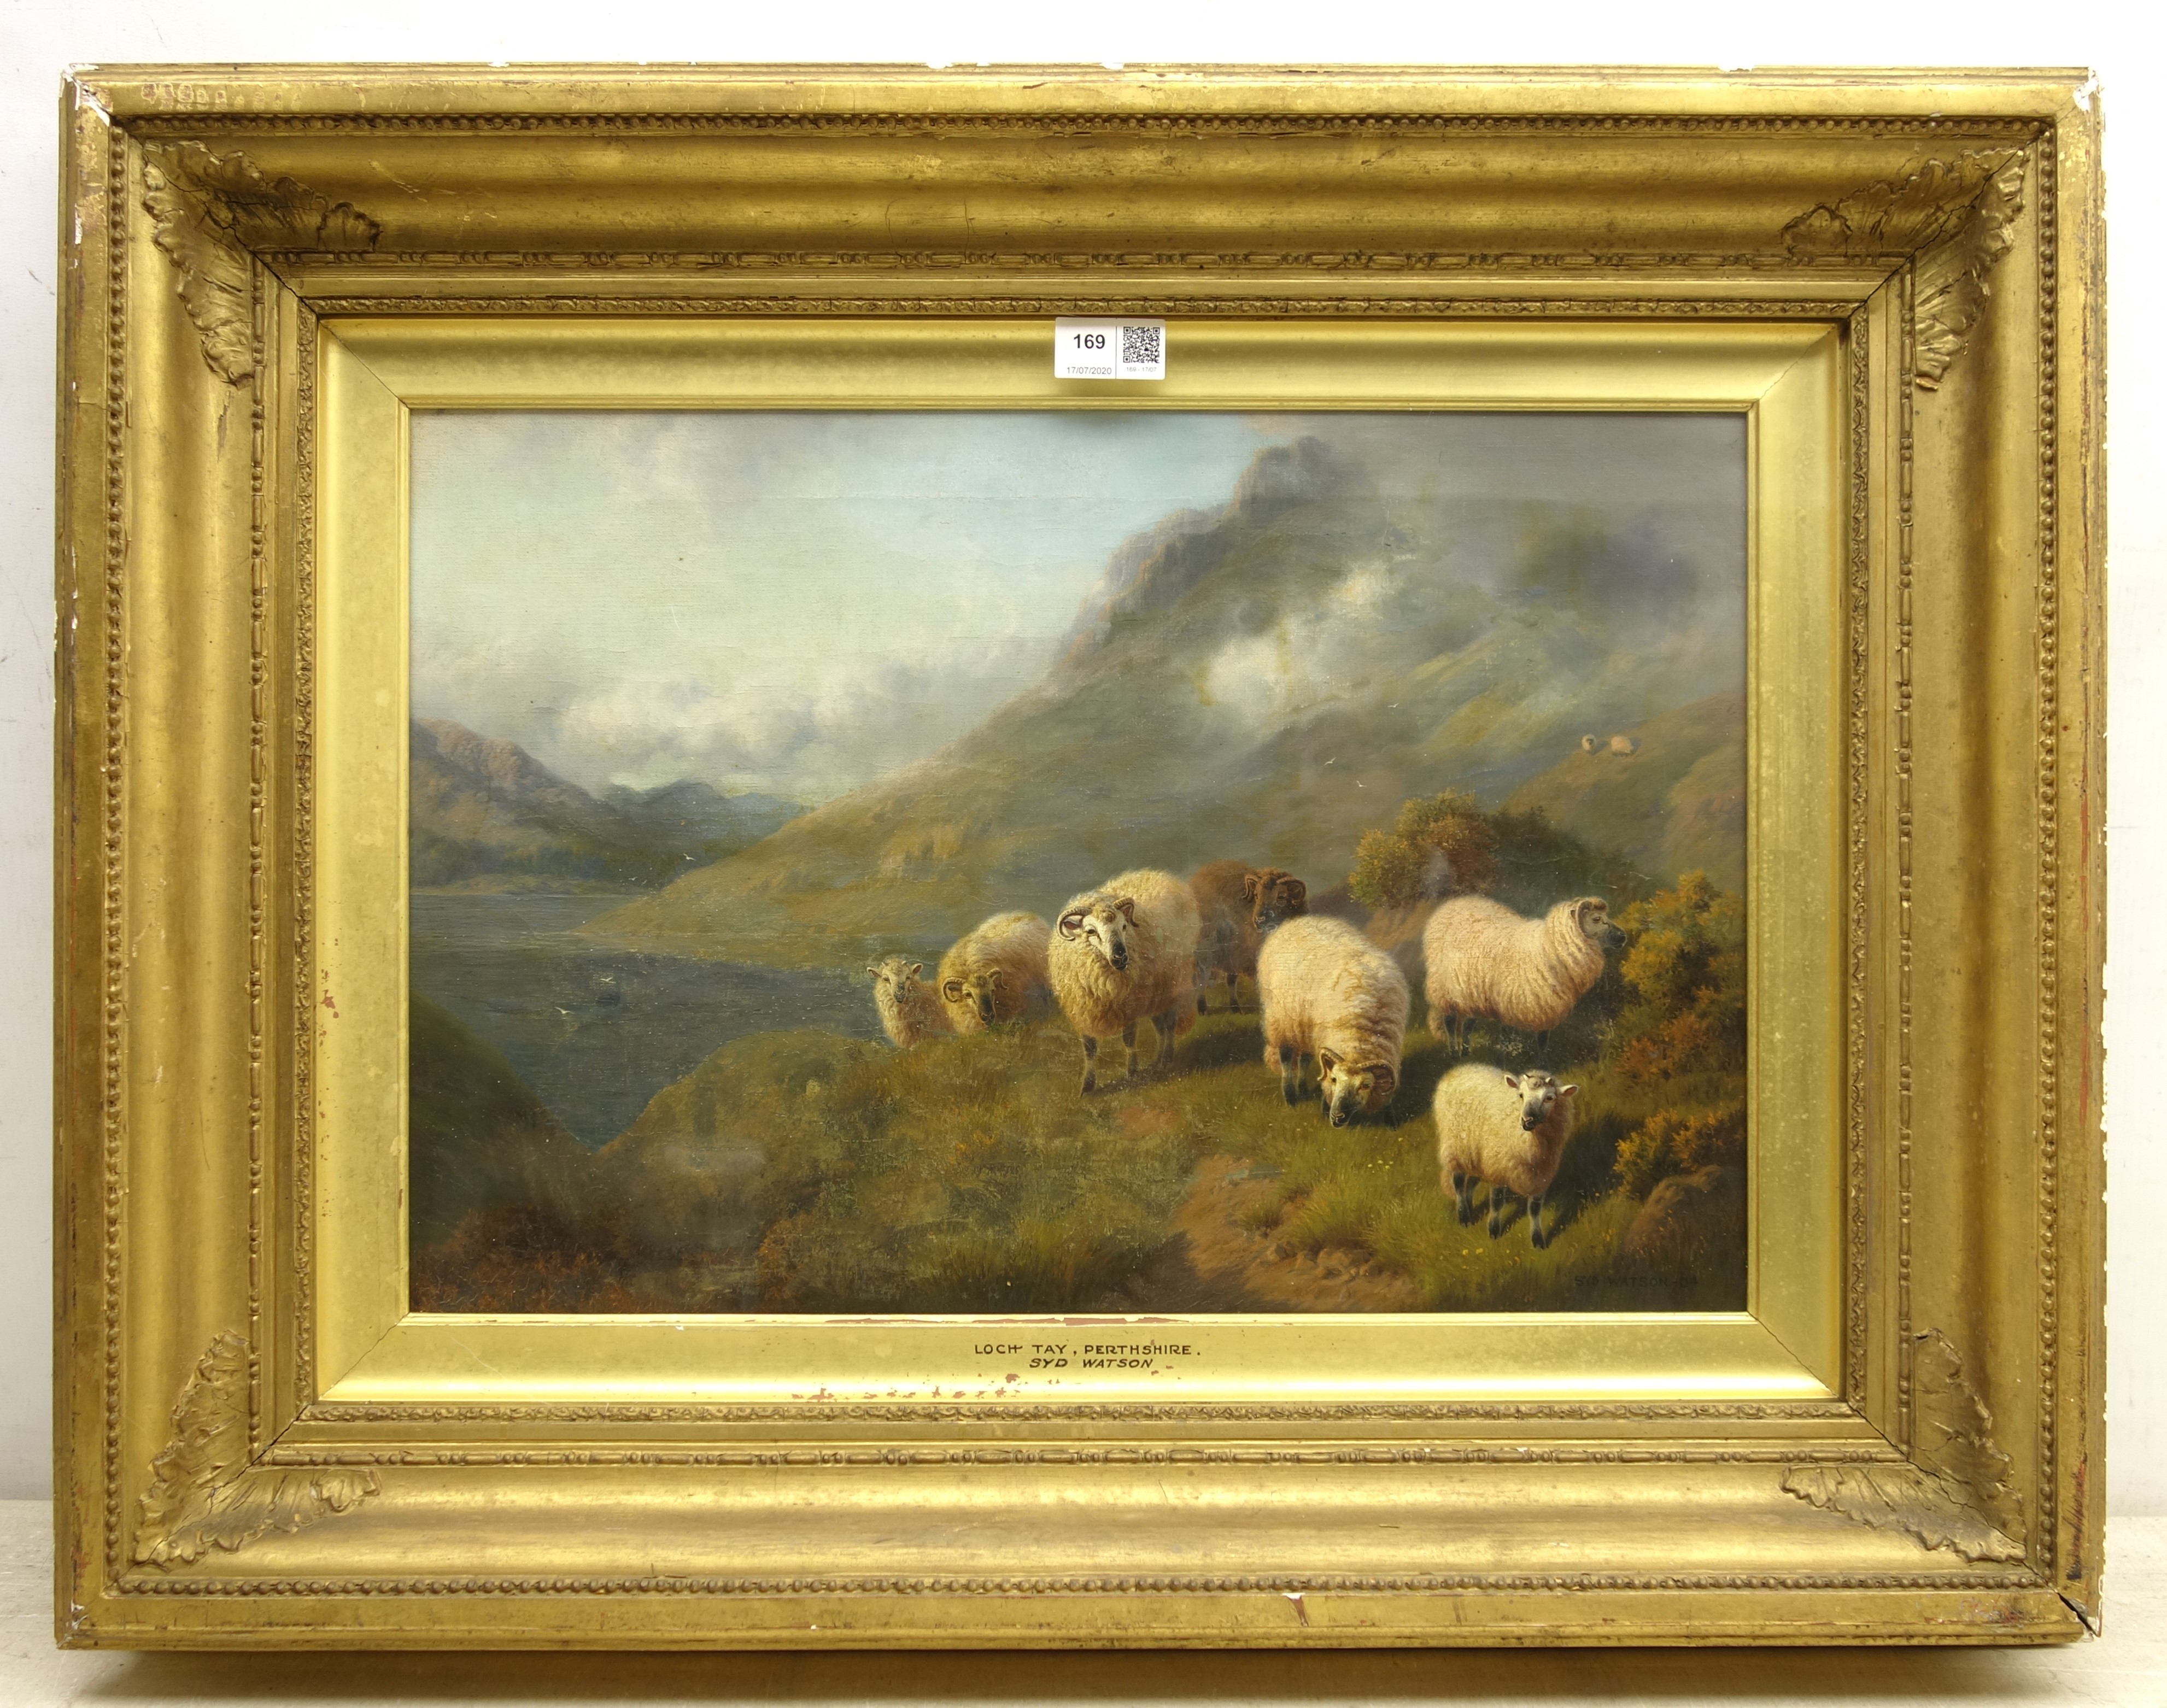 Sydney Watson Arthur (British 1881-1932): Highland Sheep - 'Loch Tay Perthshire', - Image 3 of 4